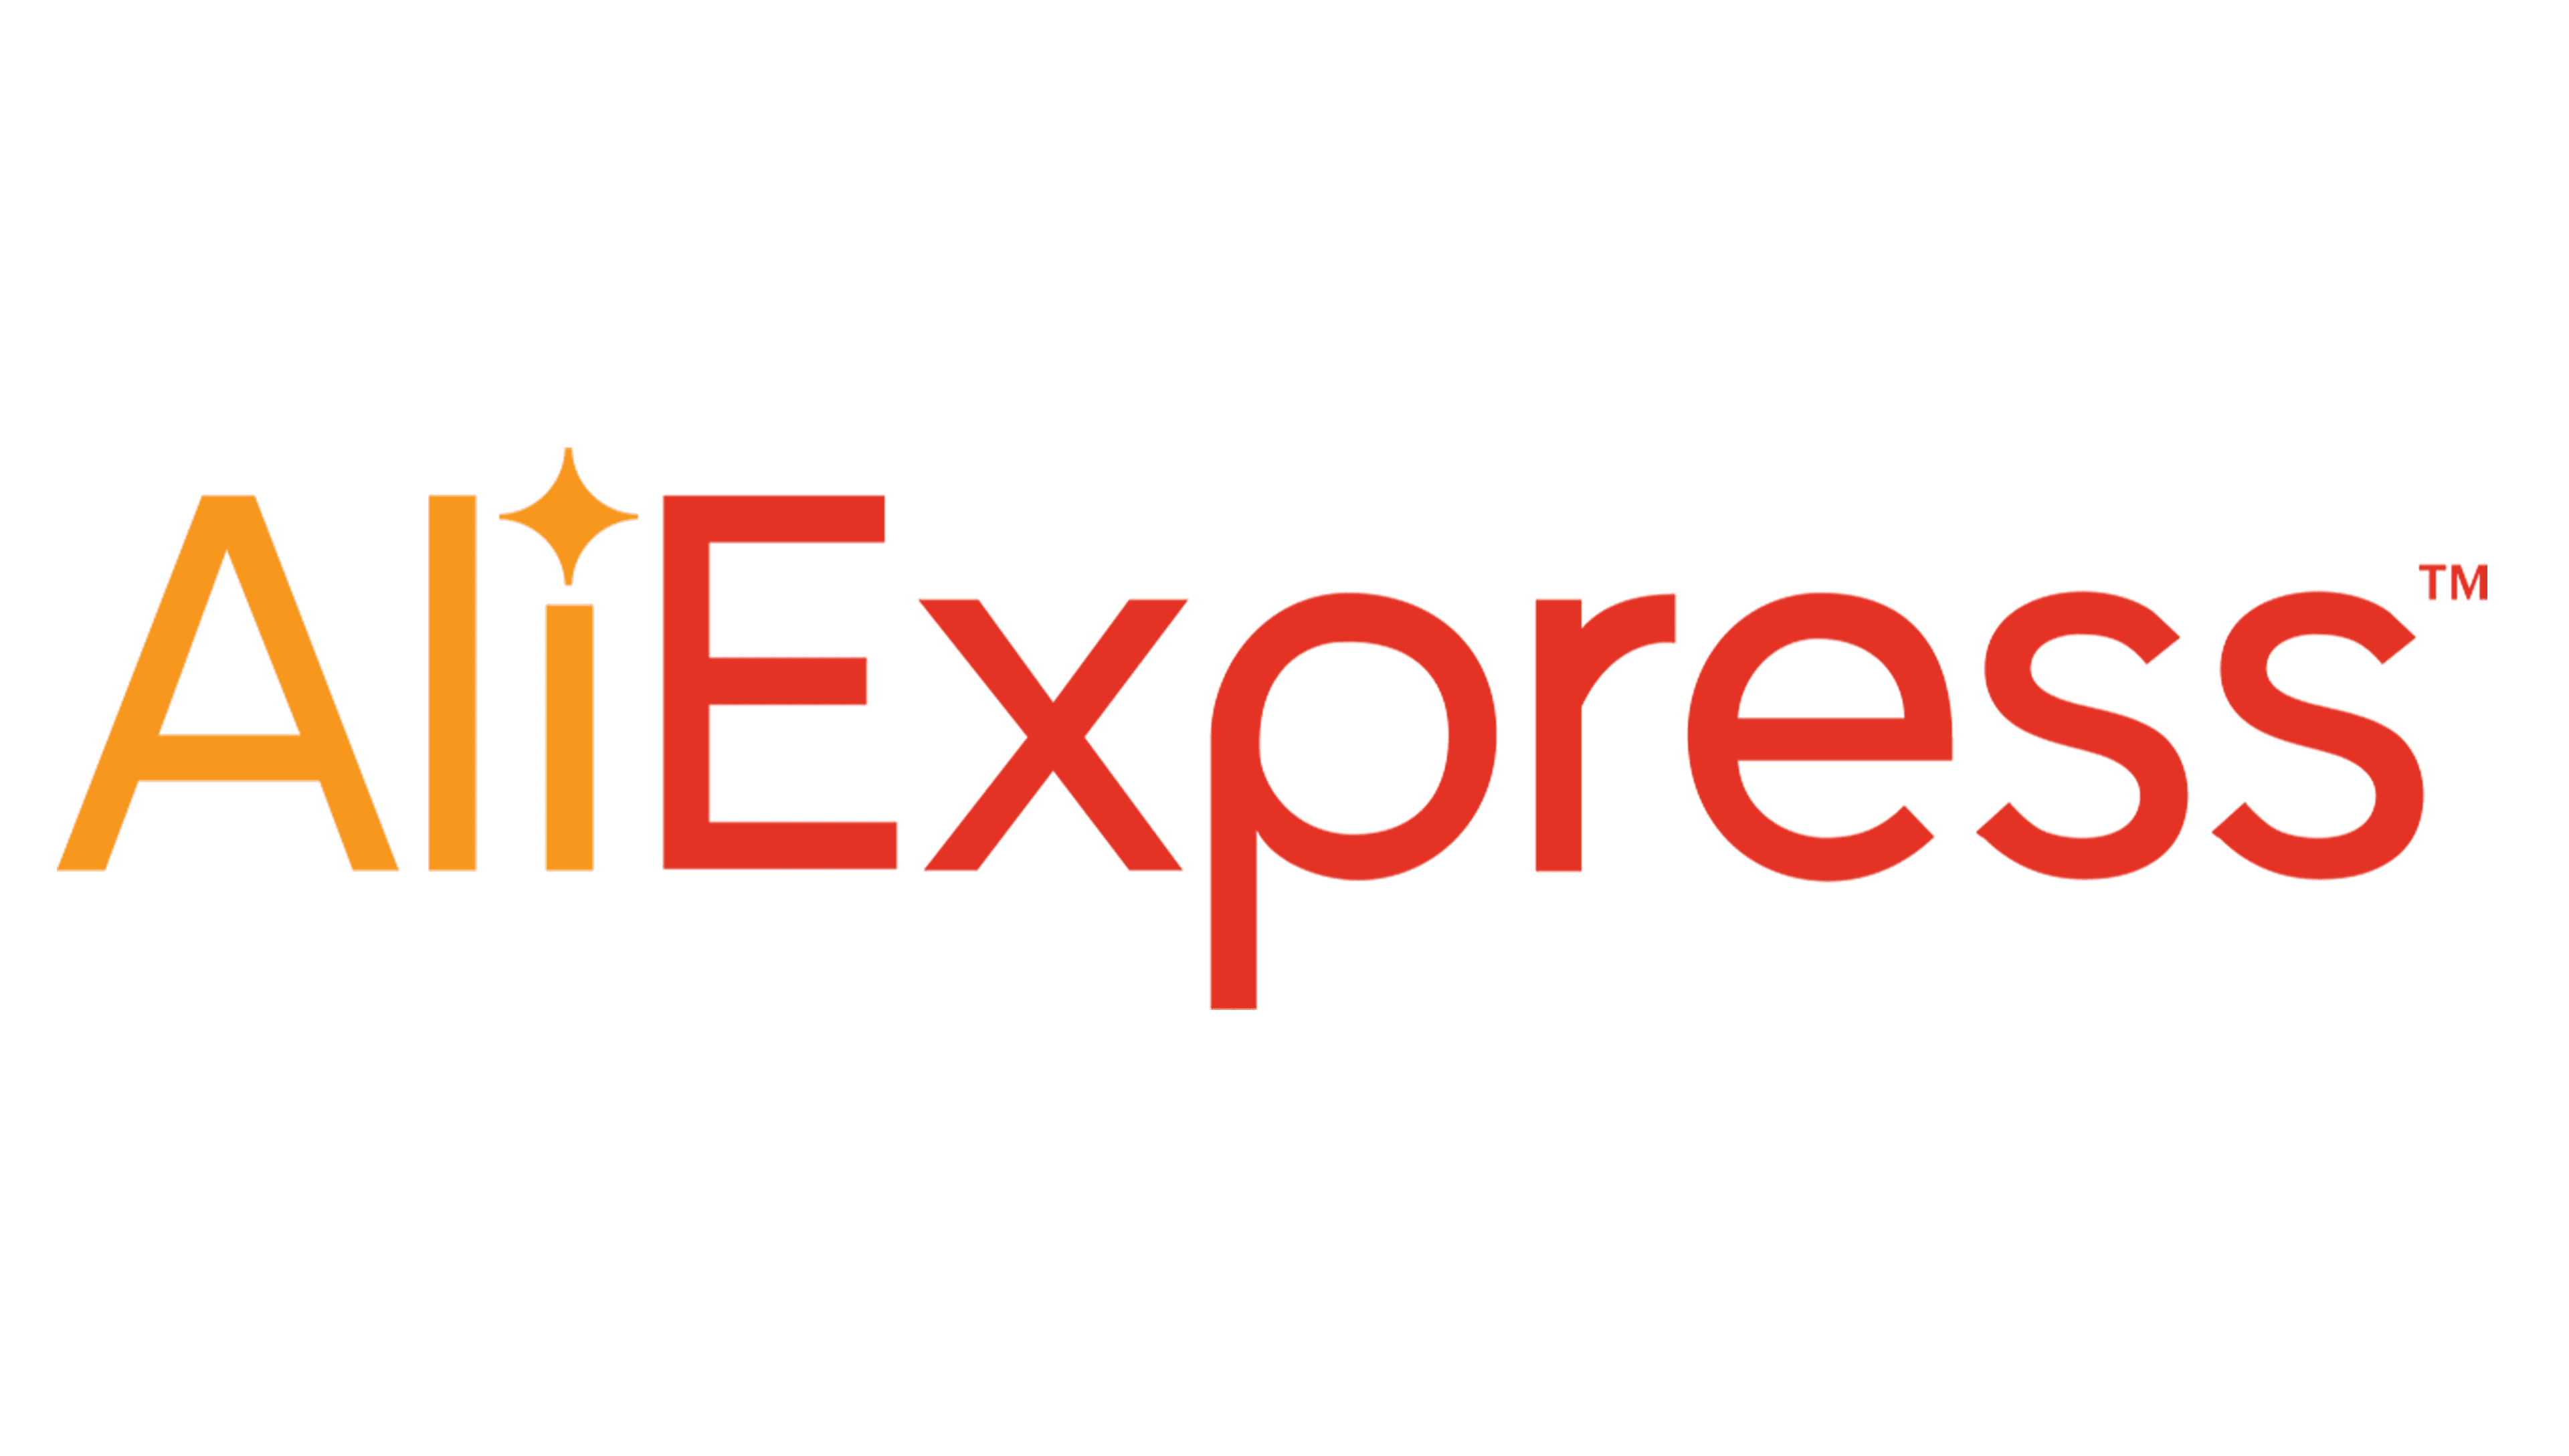 Logo de AliExpress